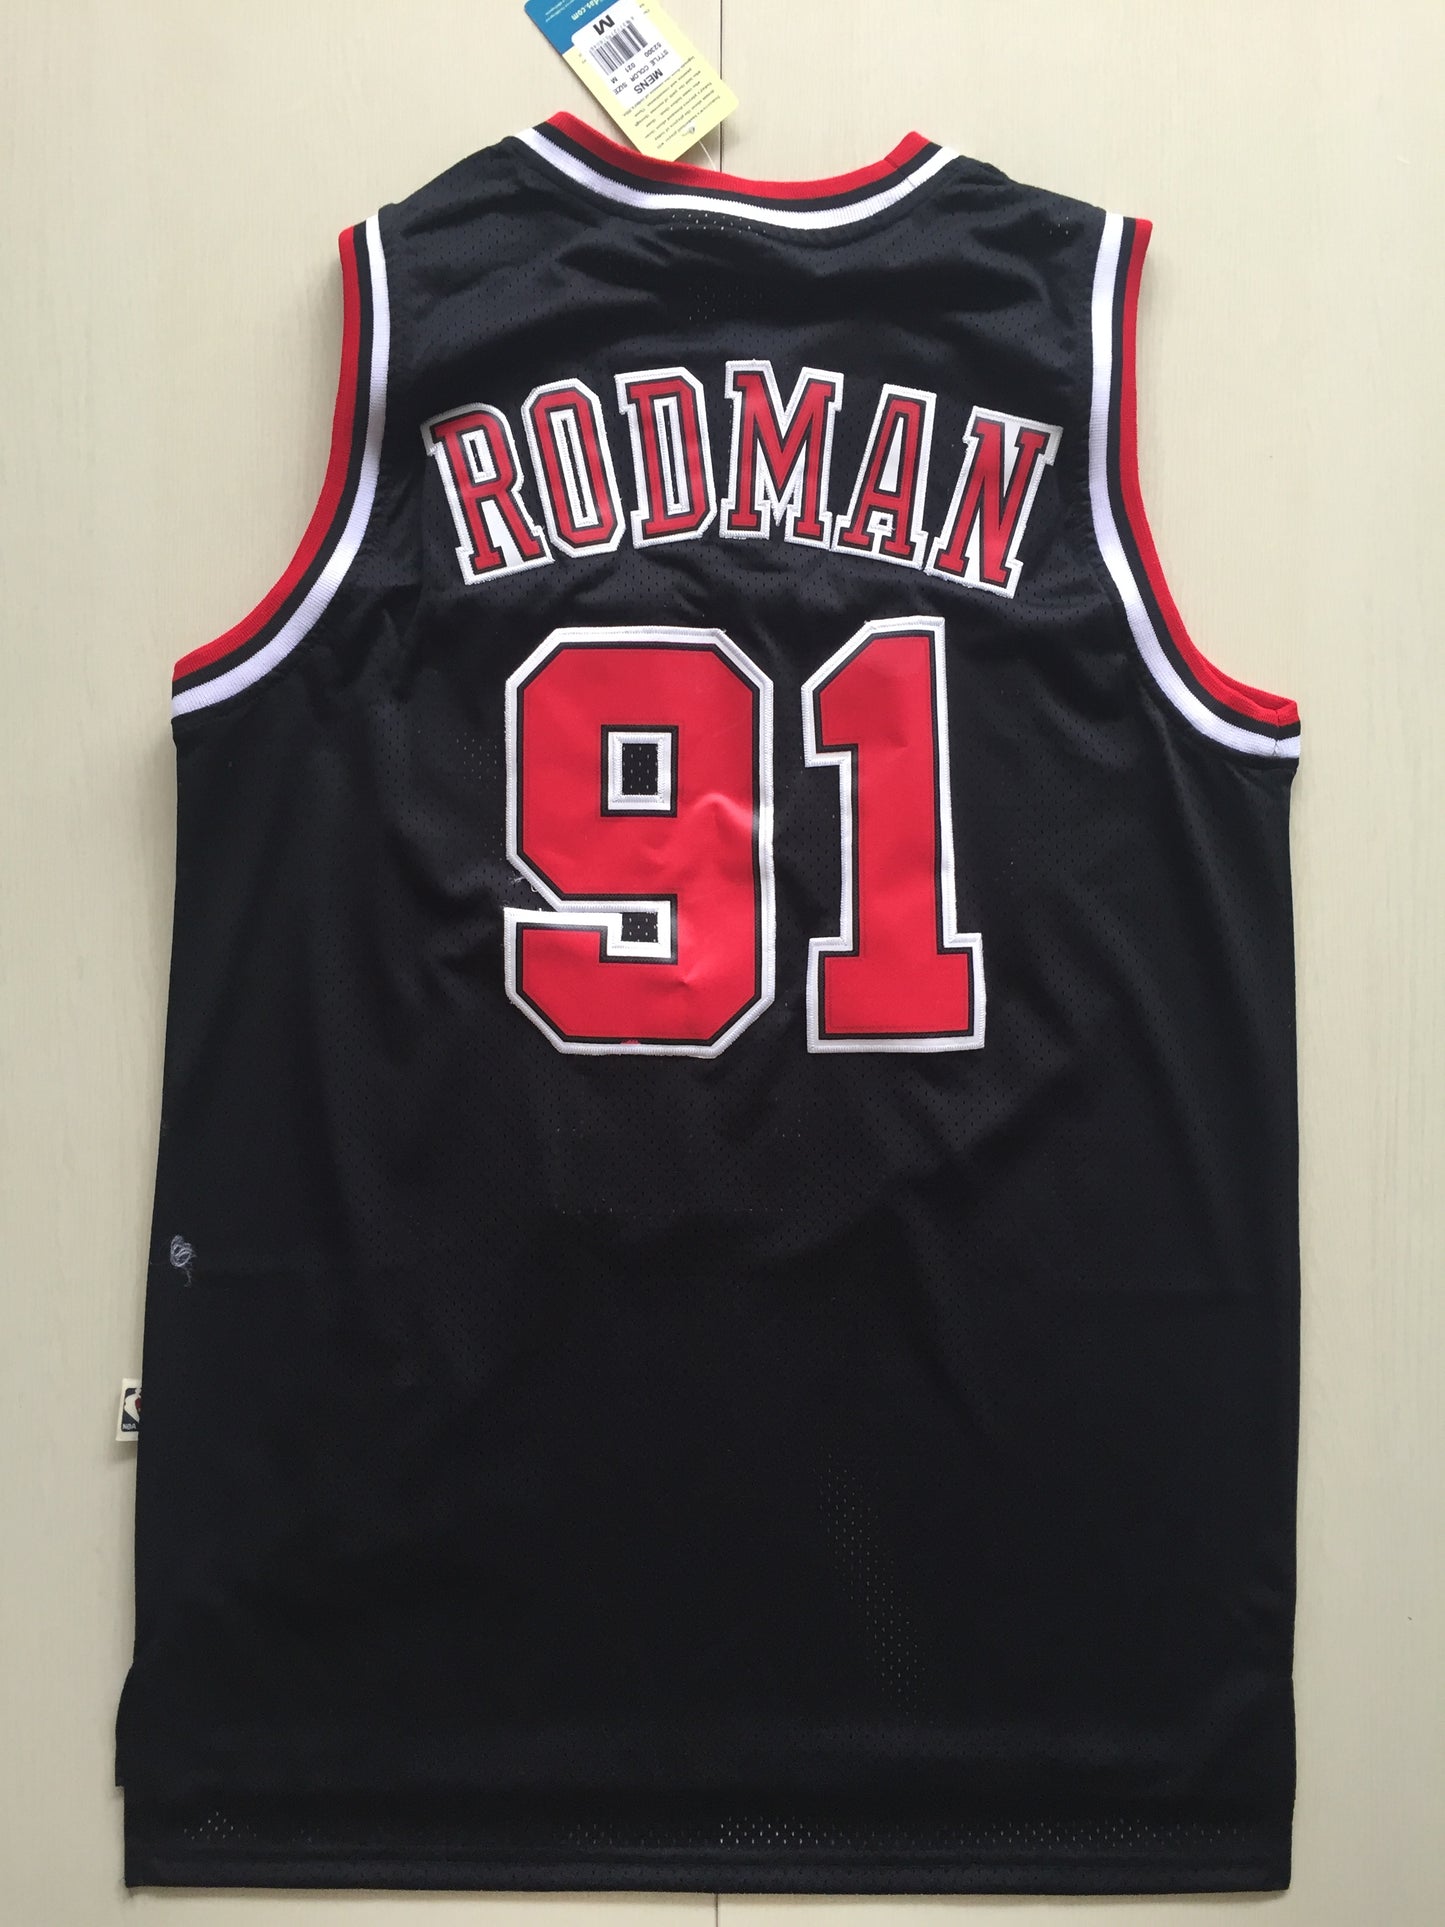 NBA Chicago Bulls Retro 1996 (Home-White, Away-Black) (Dennis Rodman, Scottie Pippen)